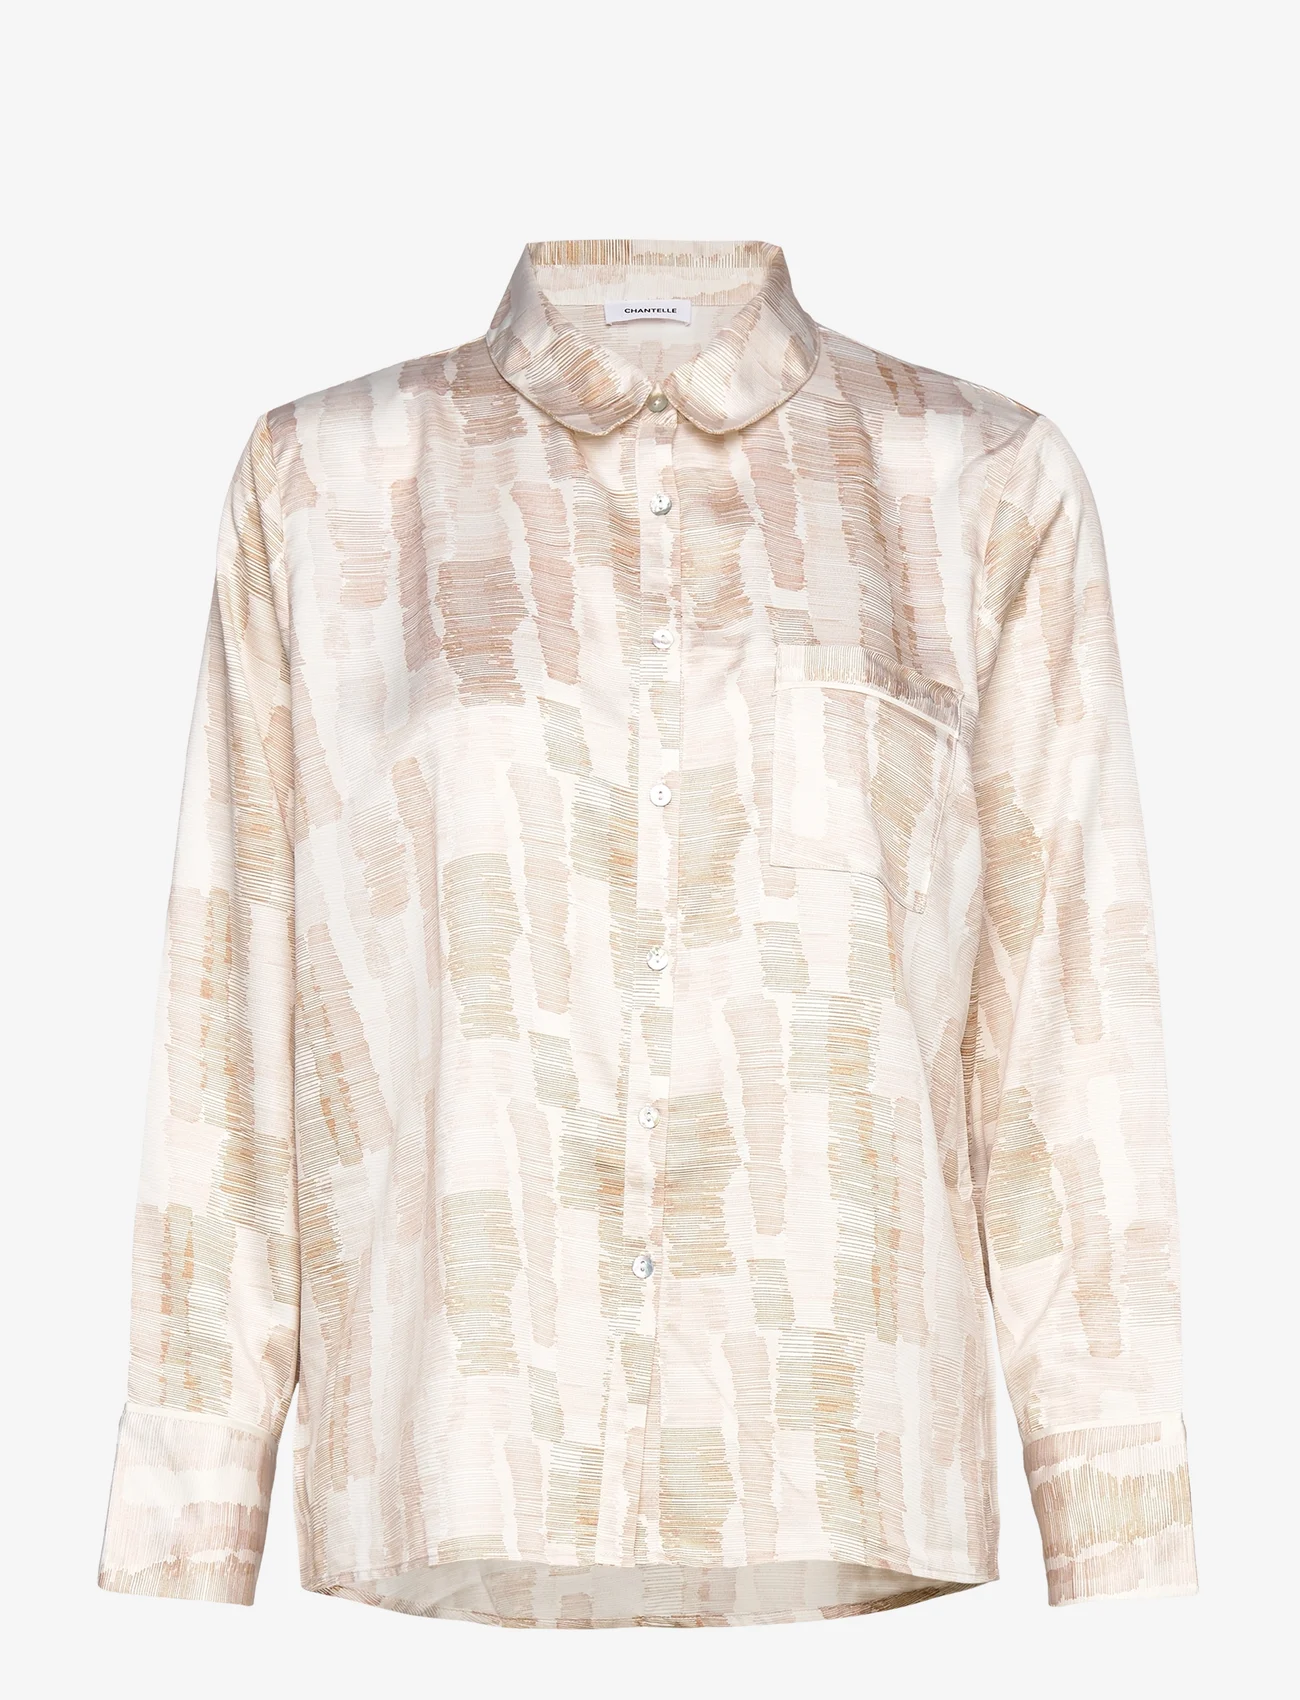 CHANTELLE - Quarts Shirt Long Sleeve - pysjoverdeler - abstract print - 0